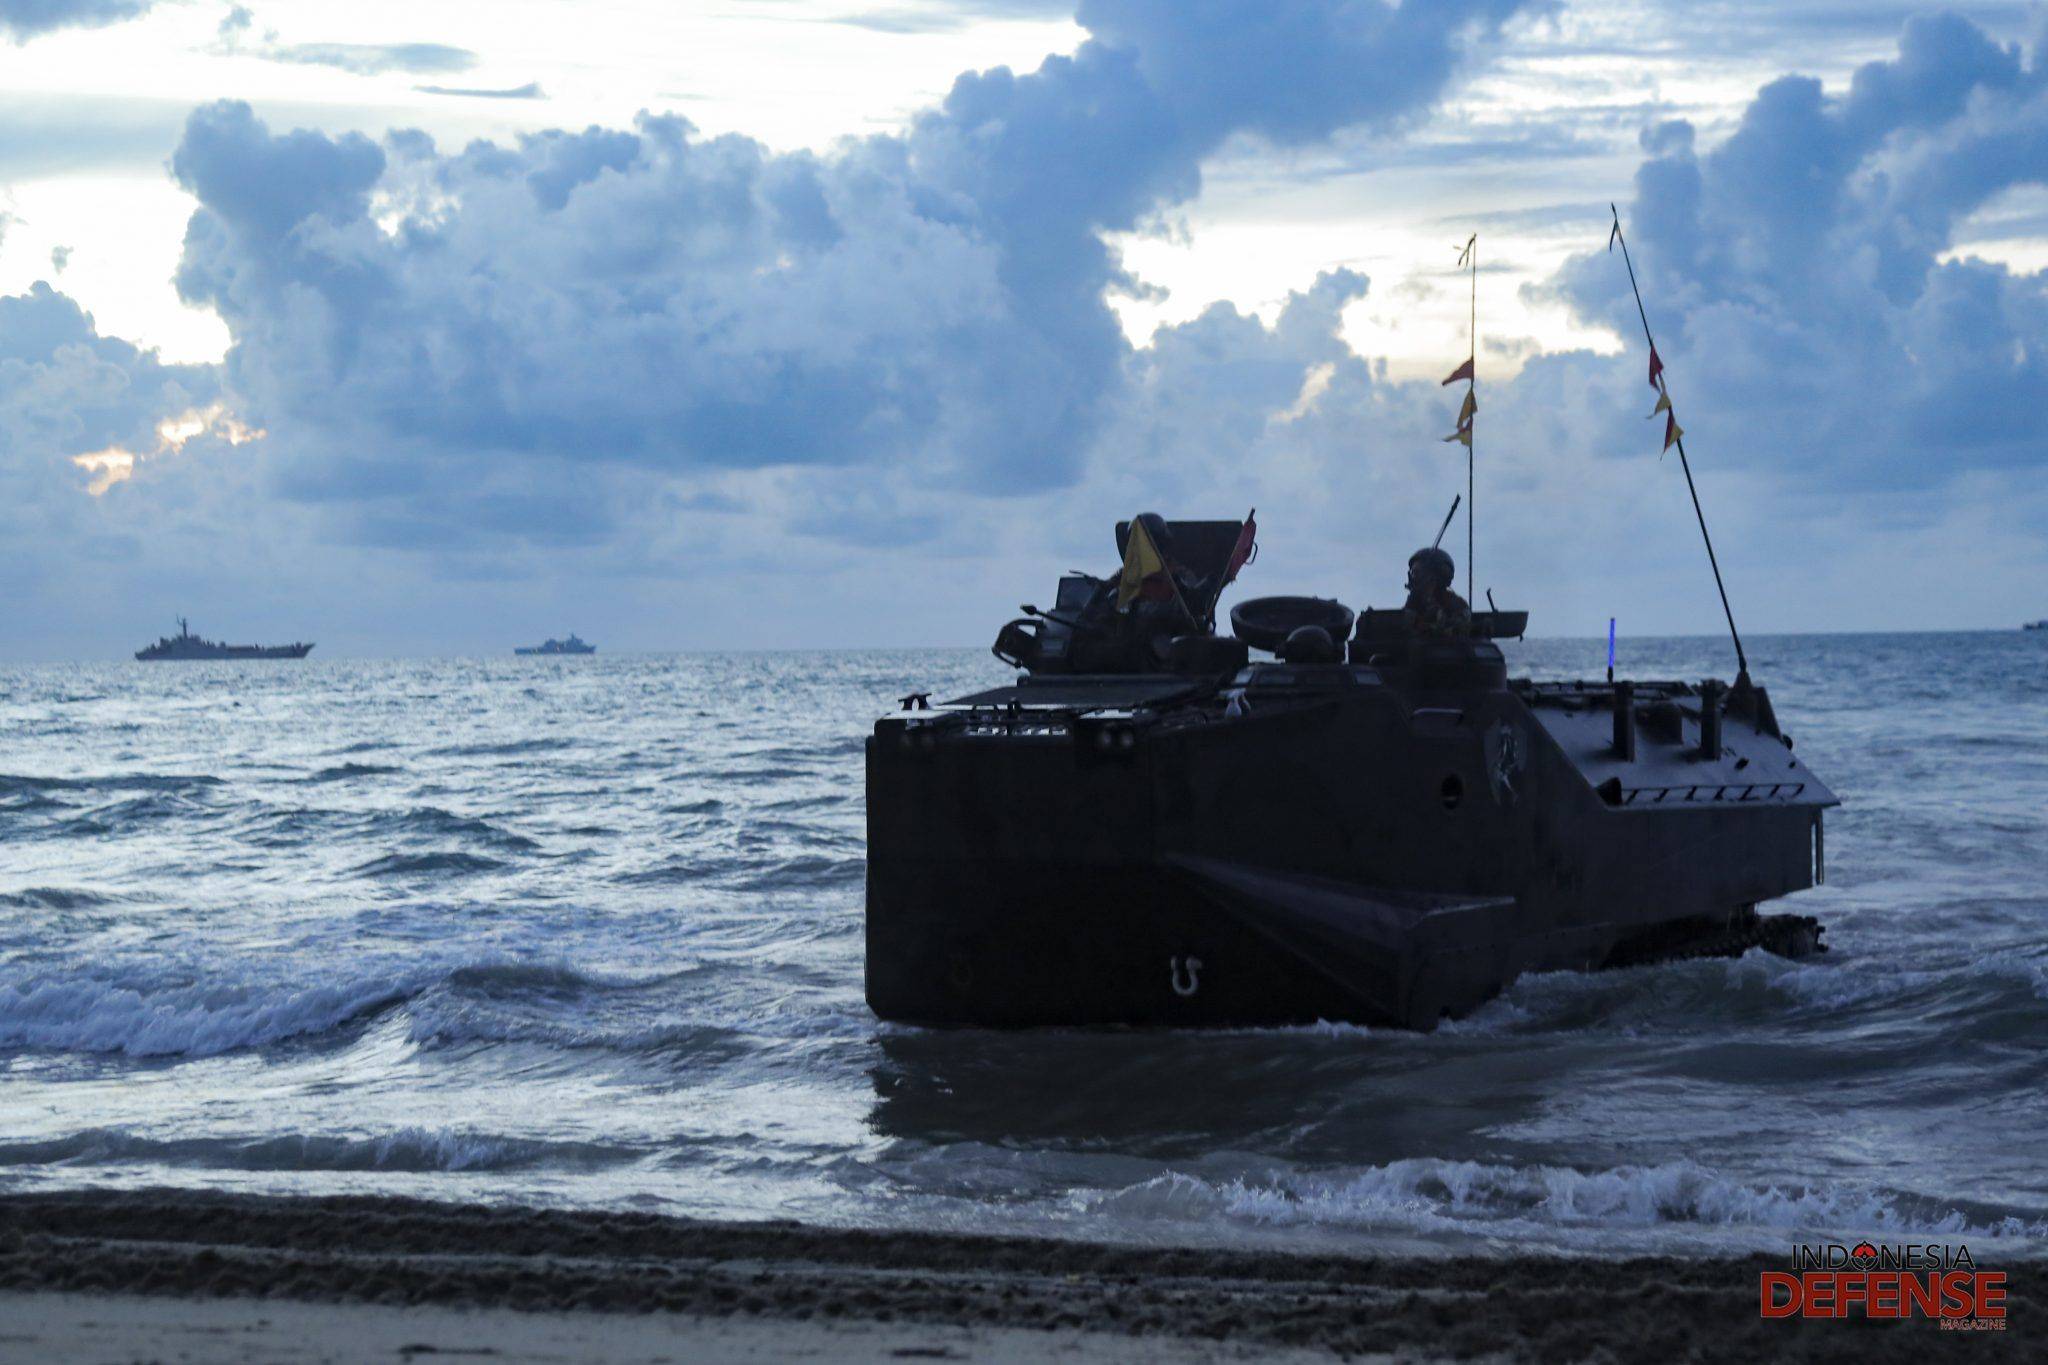 KSAL: Modernisasi Alutsista Korps Marinir Terus Berjalan - Indonesia